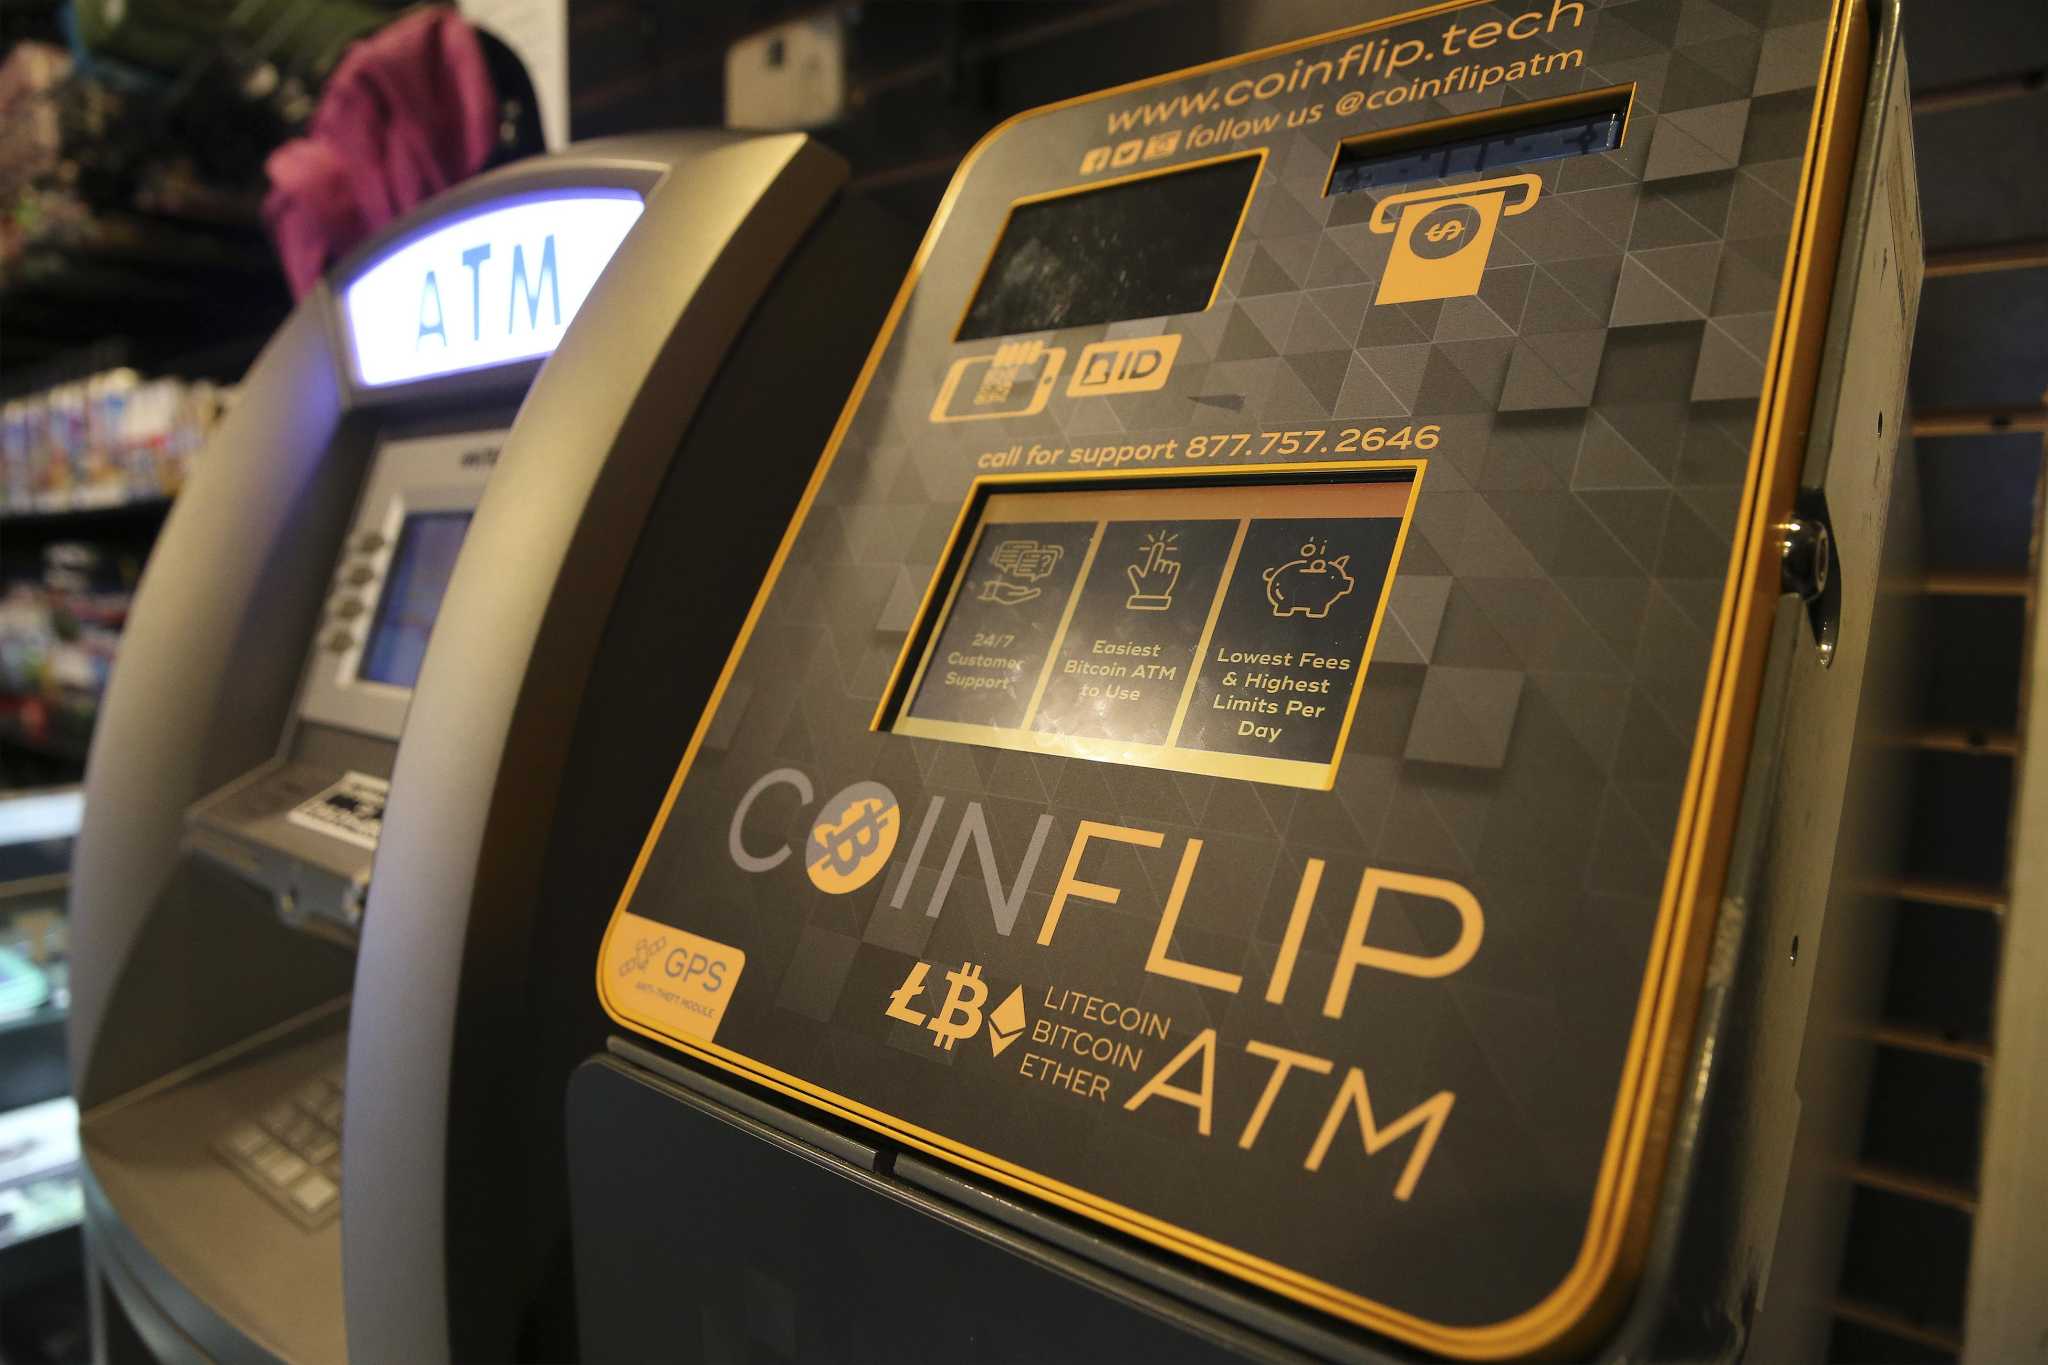 CoinFlip Bitcoin ATM, N Wickham Rd, Melbourne, FL - MapQuest